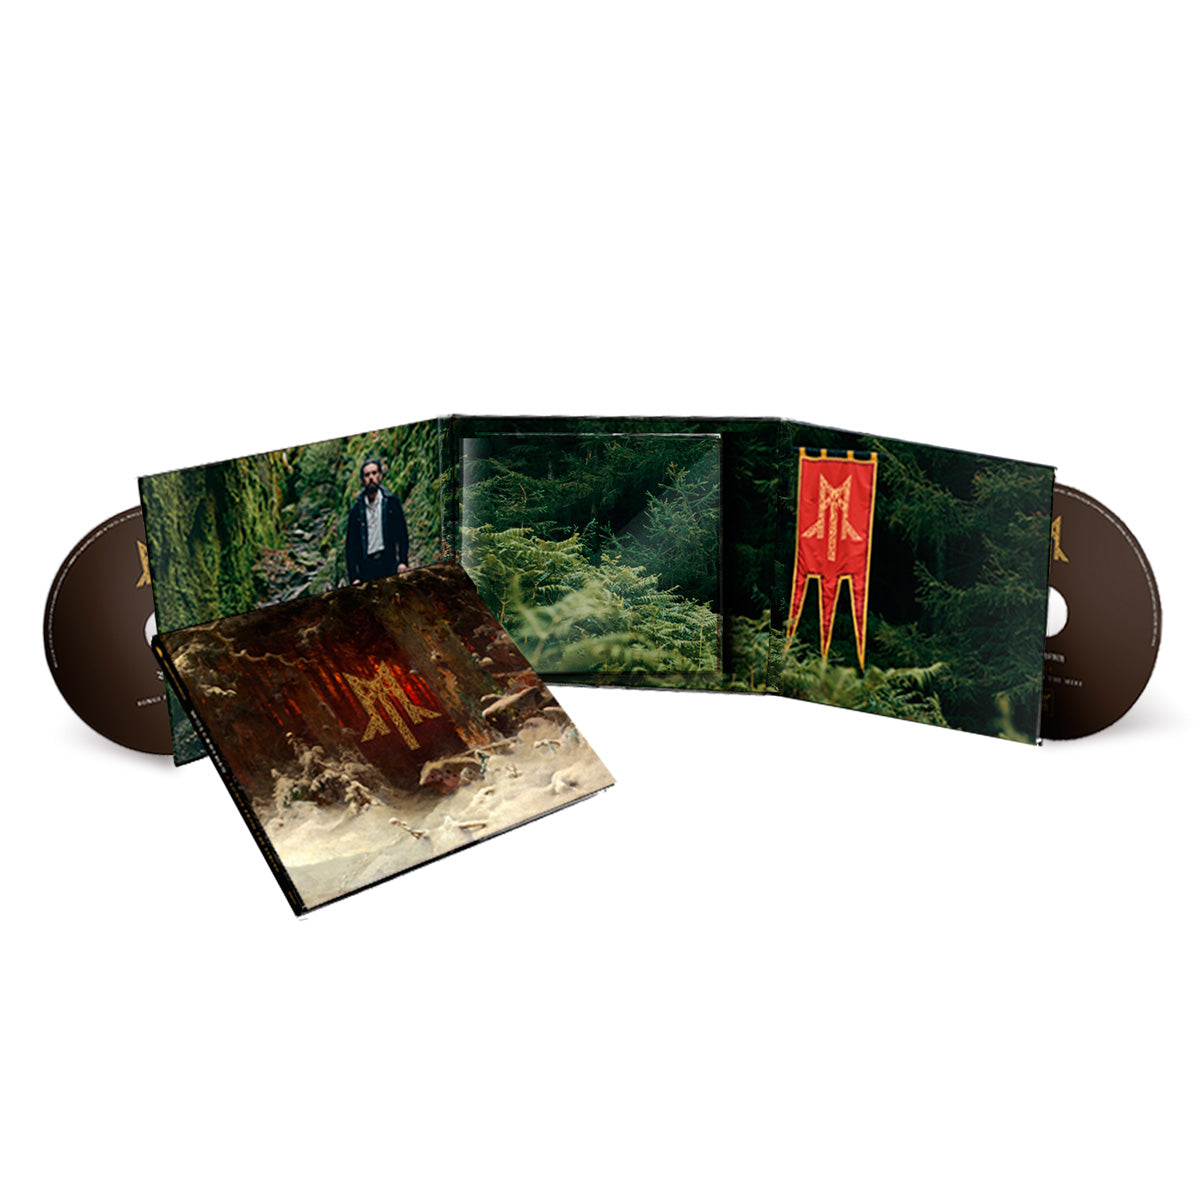 WOLCENSMEN - Songs From The Fyrgen (2CD Digisleeve)